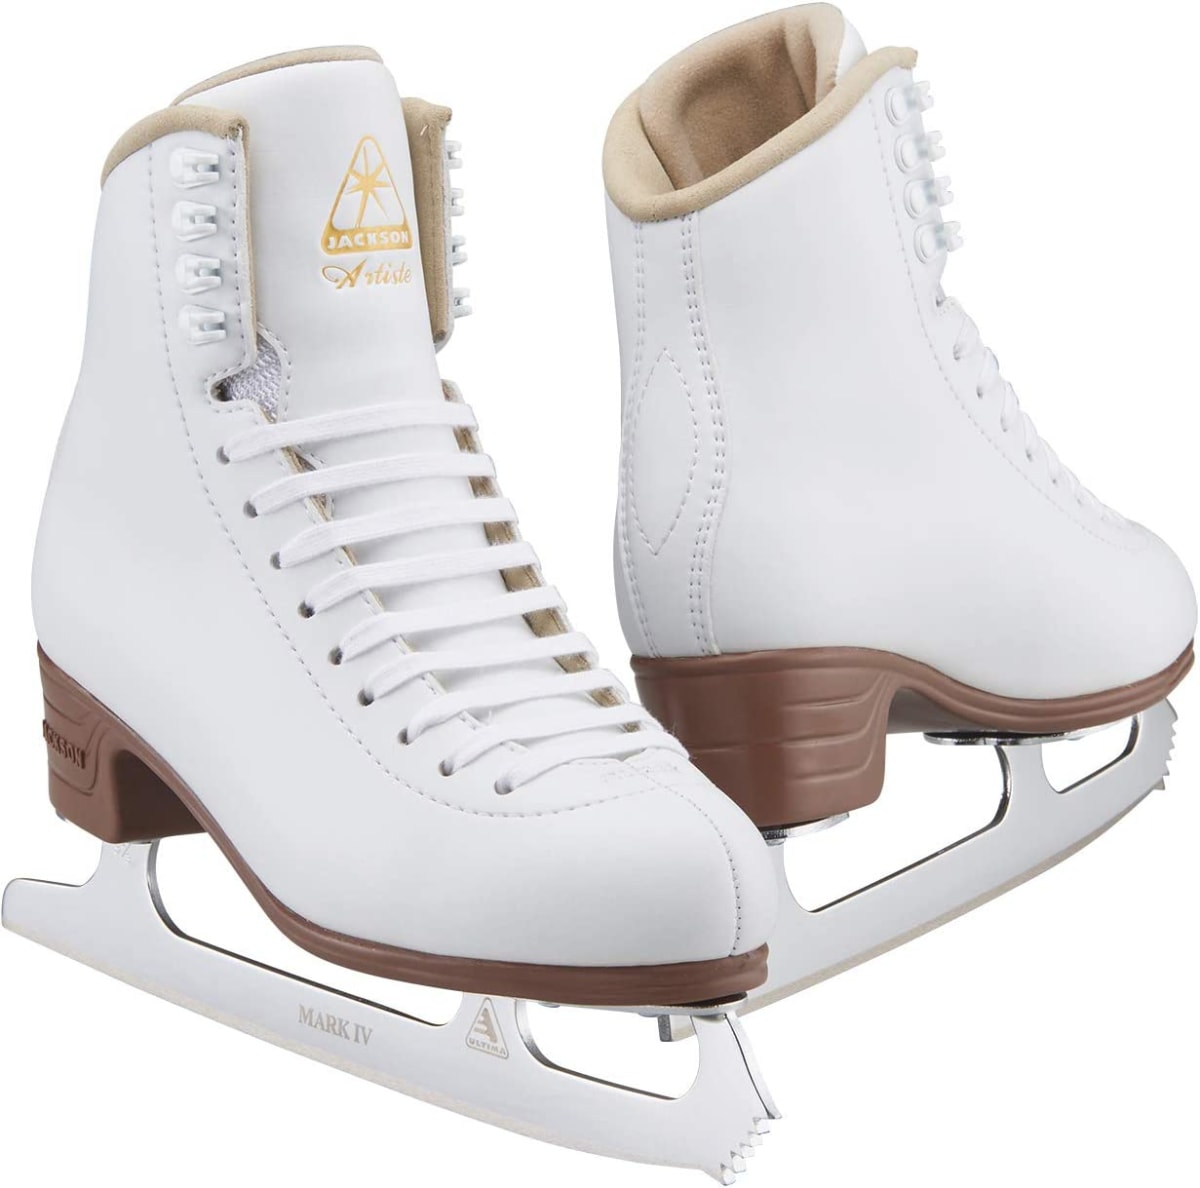 Jackson Ultima Figure Ice Skates for Women and Girls Bundle with Bag and/or Guardog Skate Guards